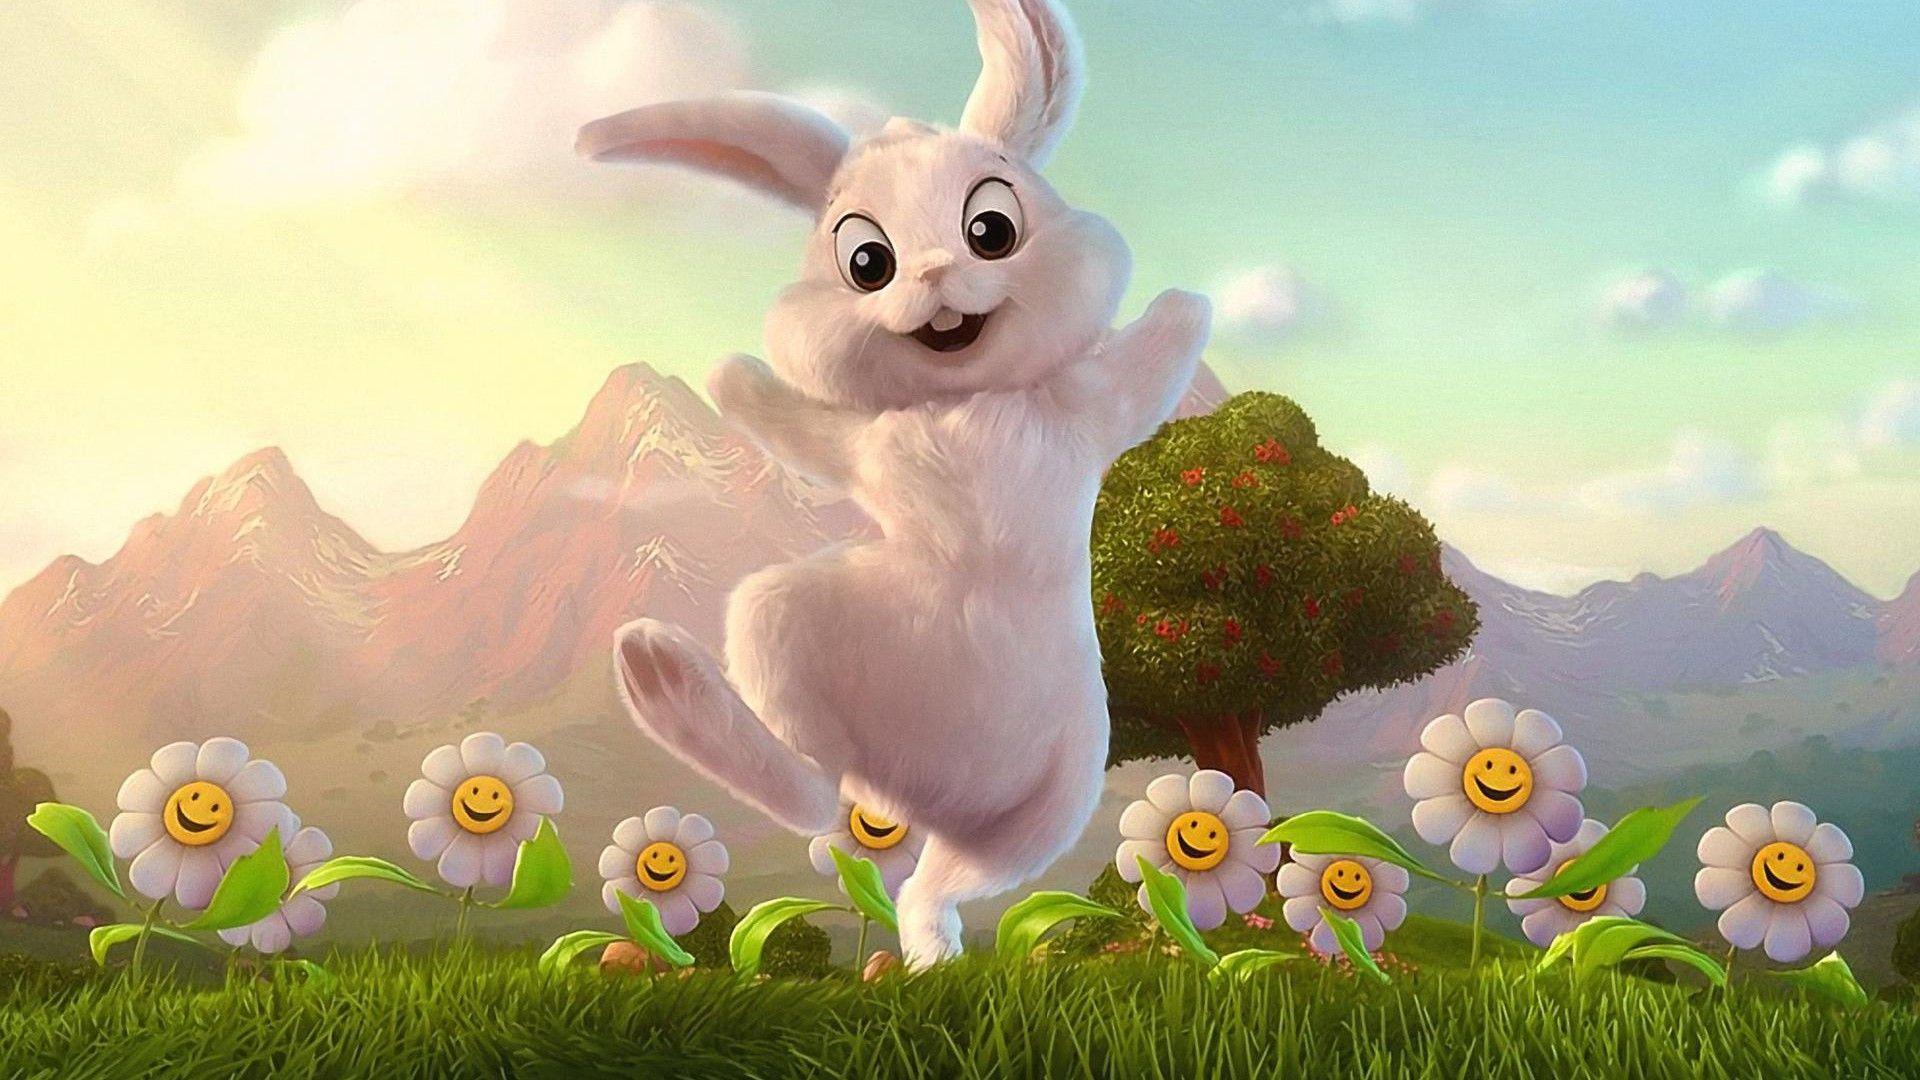 desktop animated rabbit image download. Easter bunny